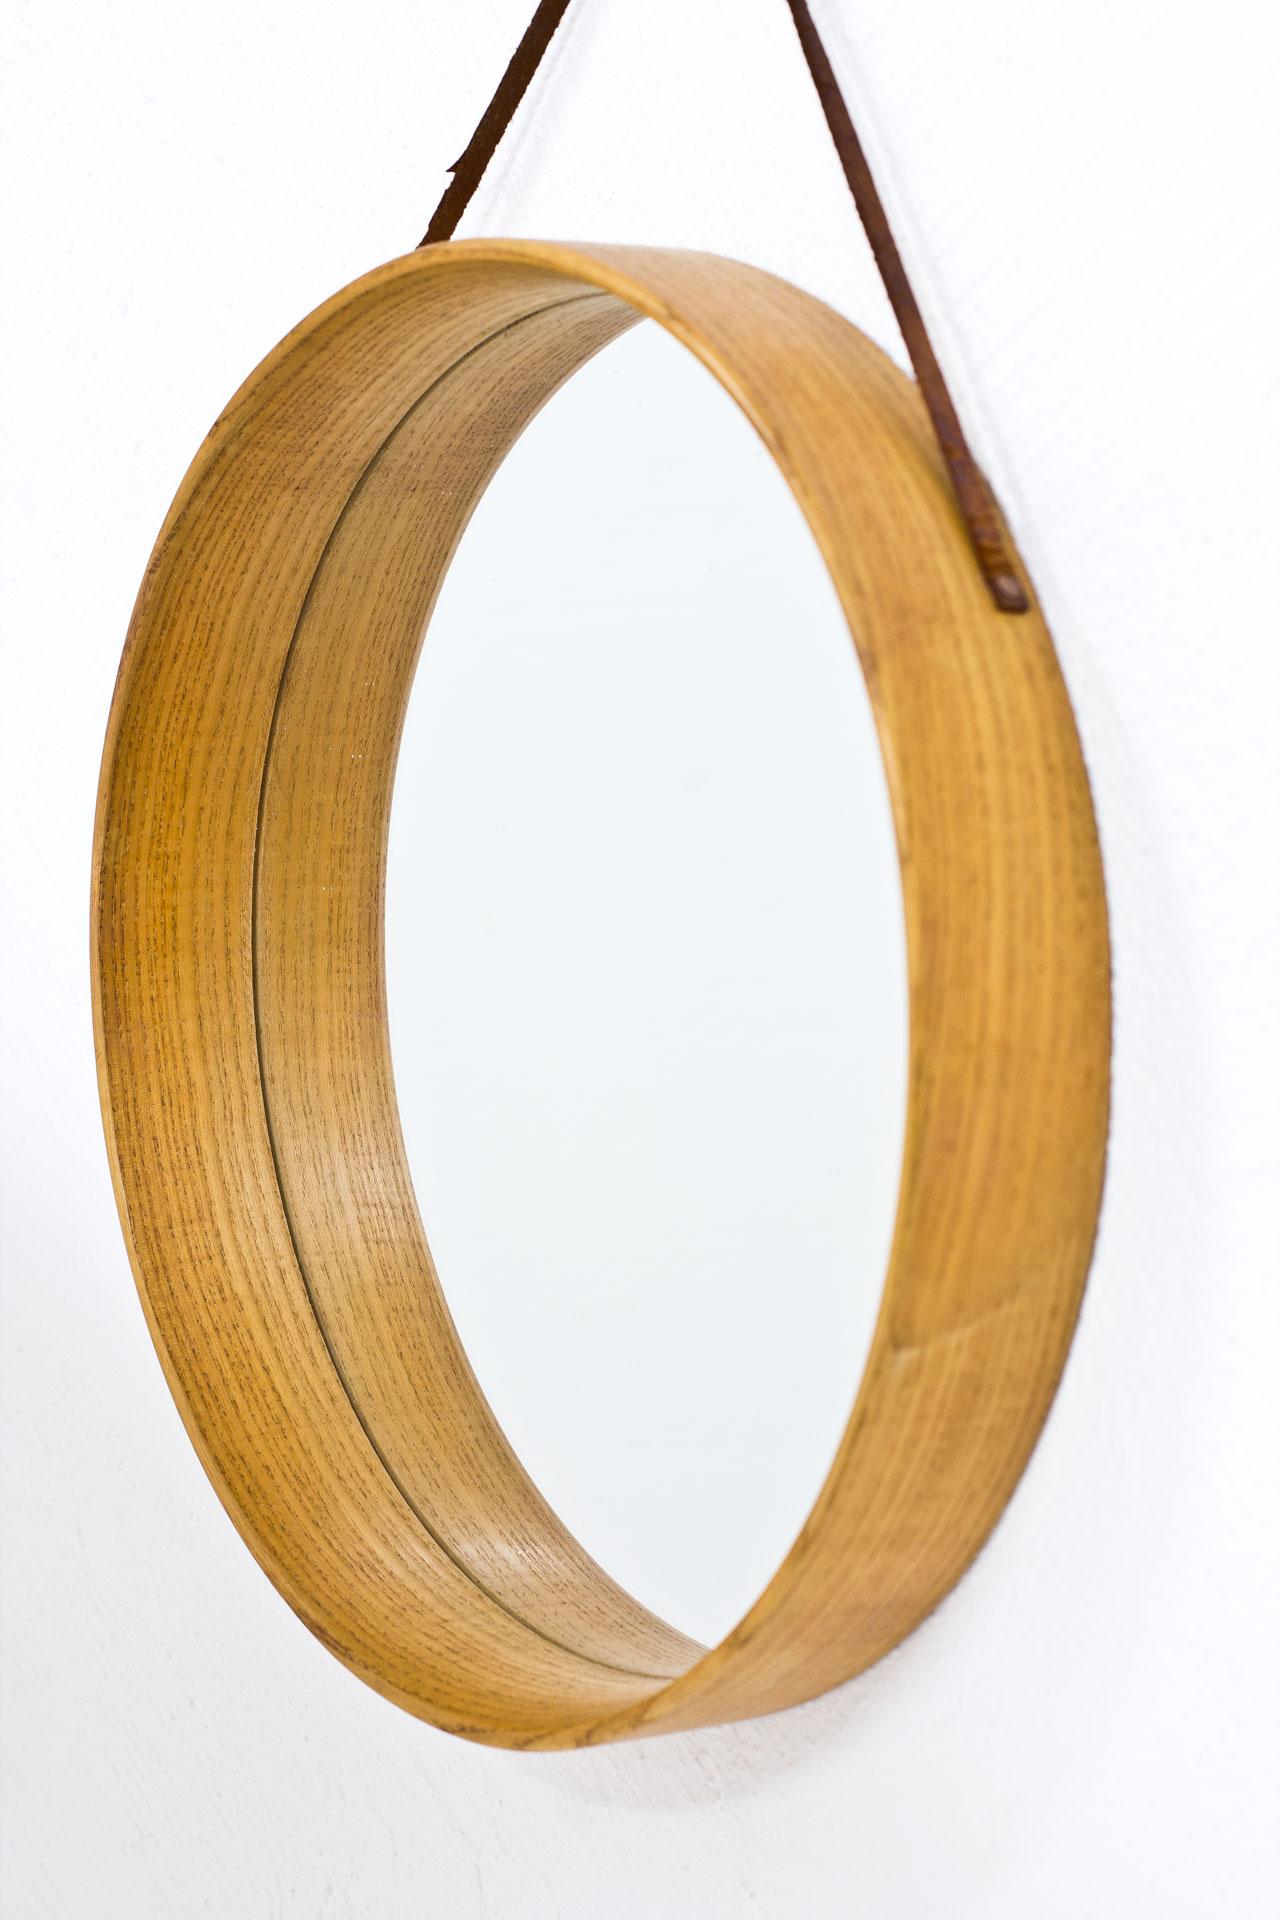 Scandinavian Modern Swedish Oak and Leather Round Wall Mirror, 1950s